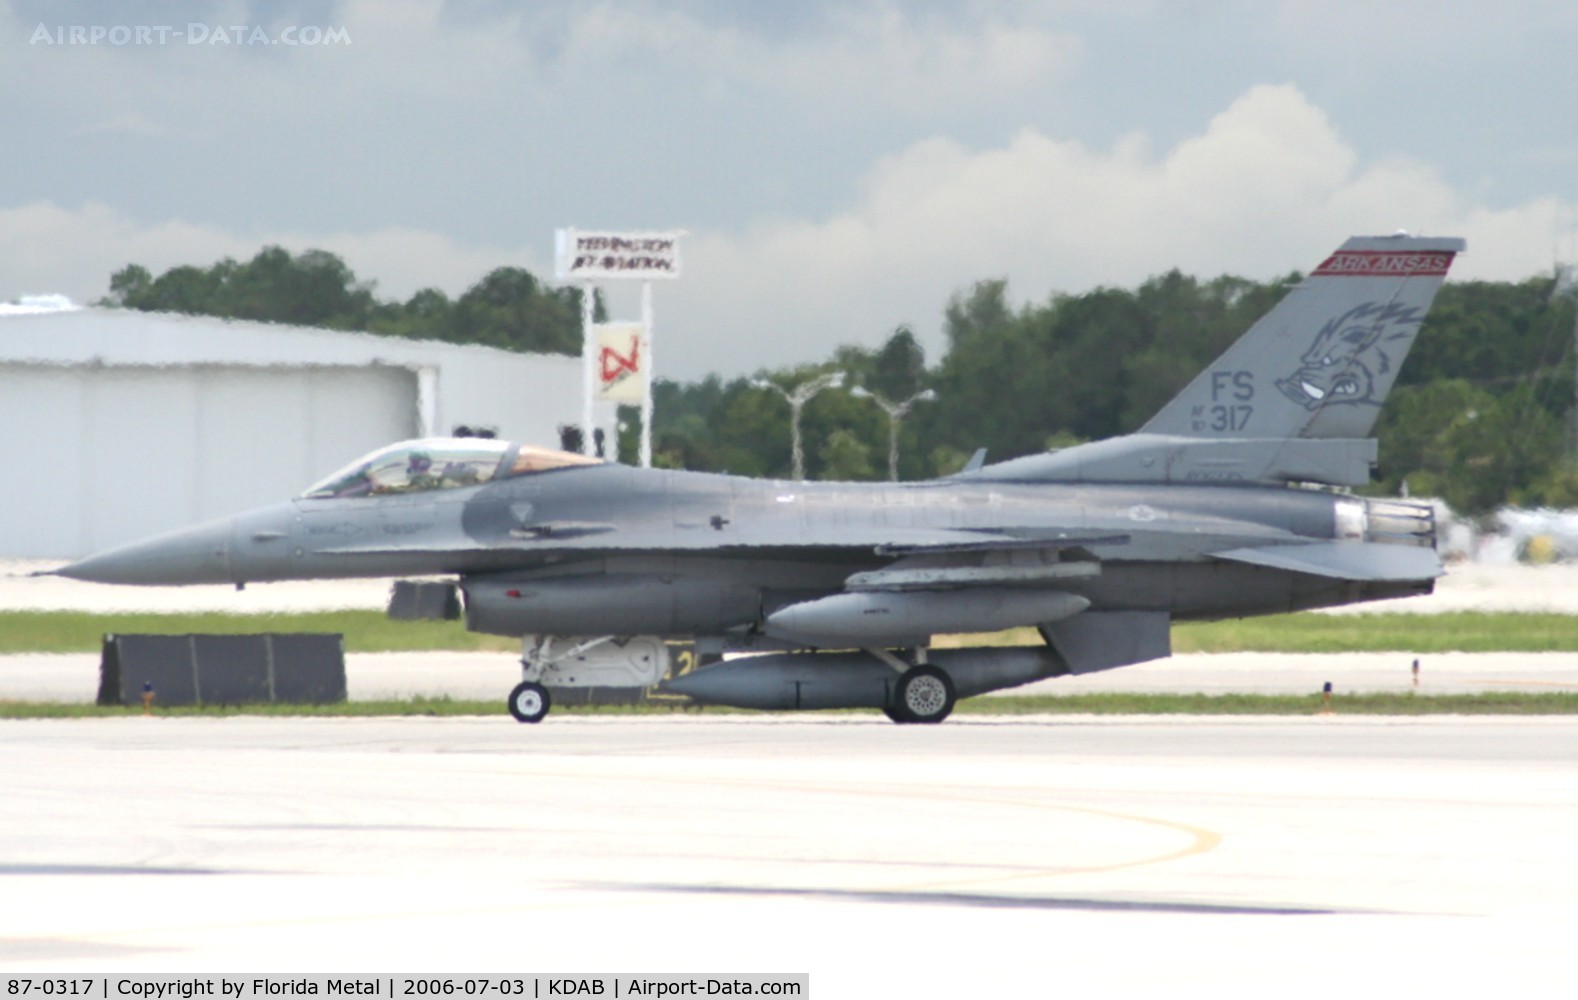 87-0317, 1987 General Dynamics F-16C Fighting Falcon C/N 5C-578, F-16 zx